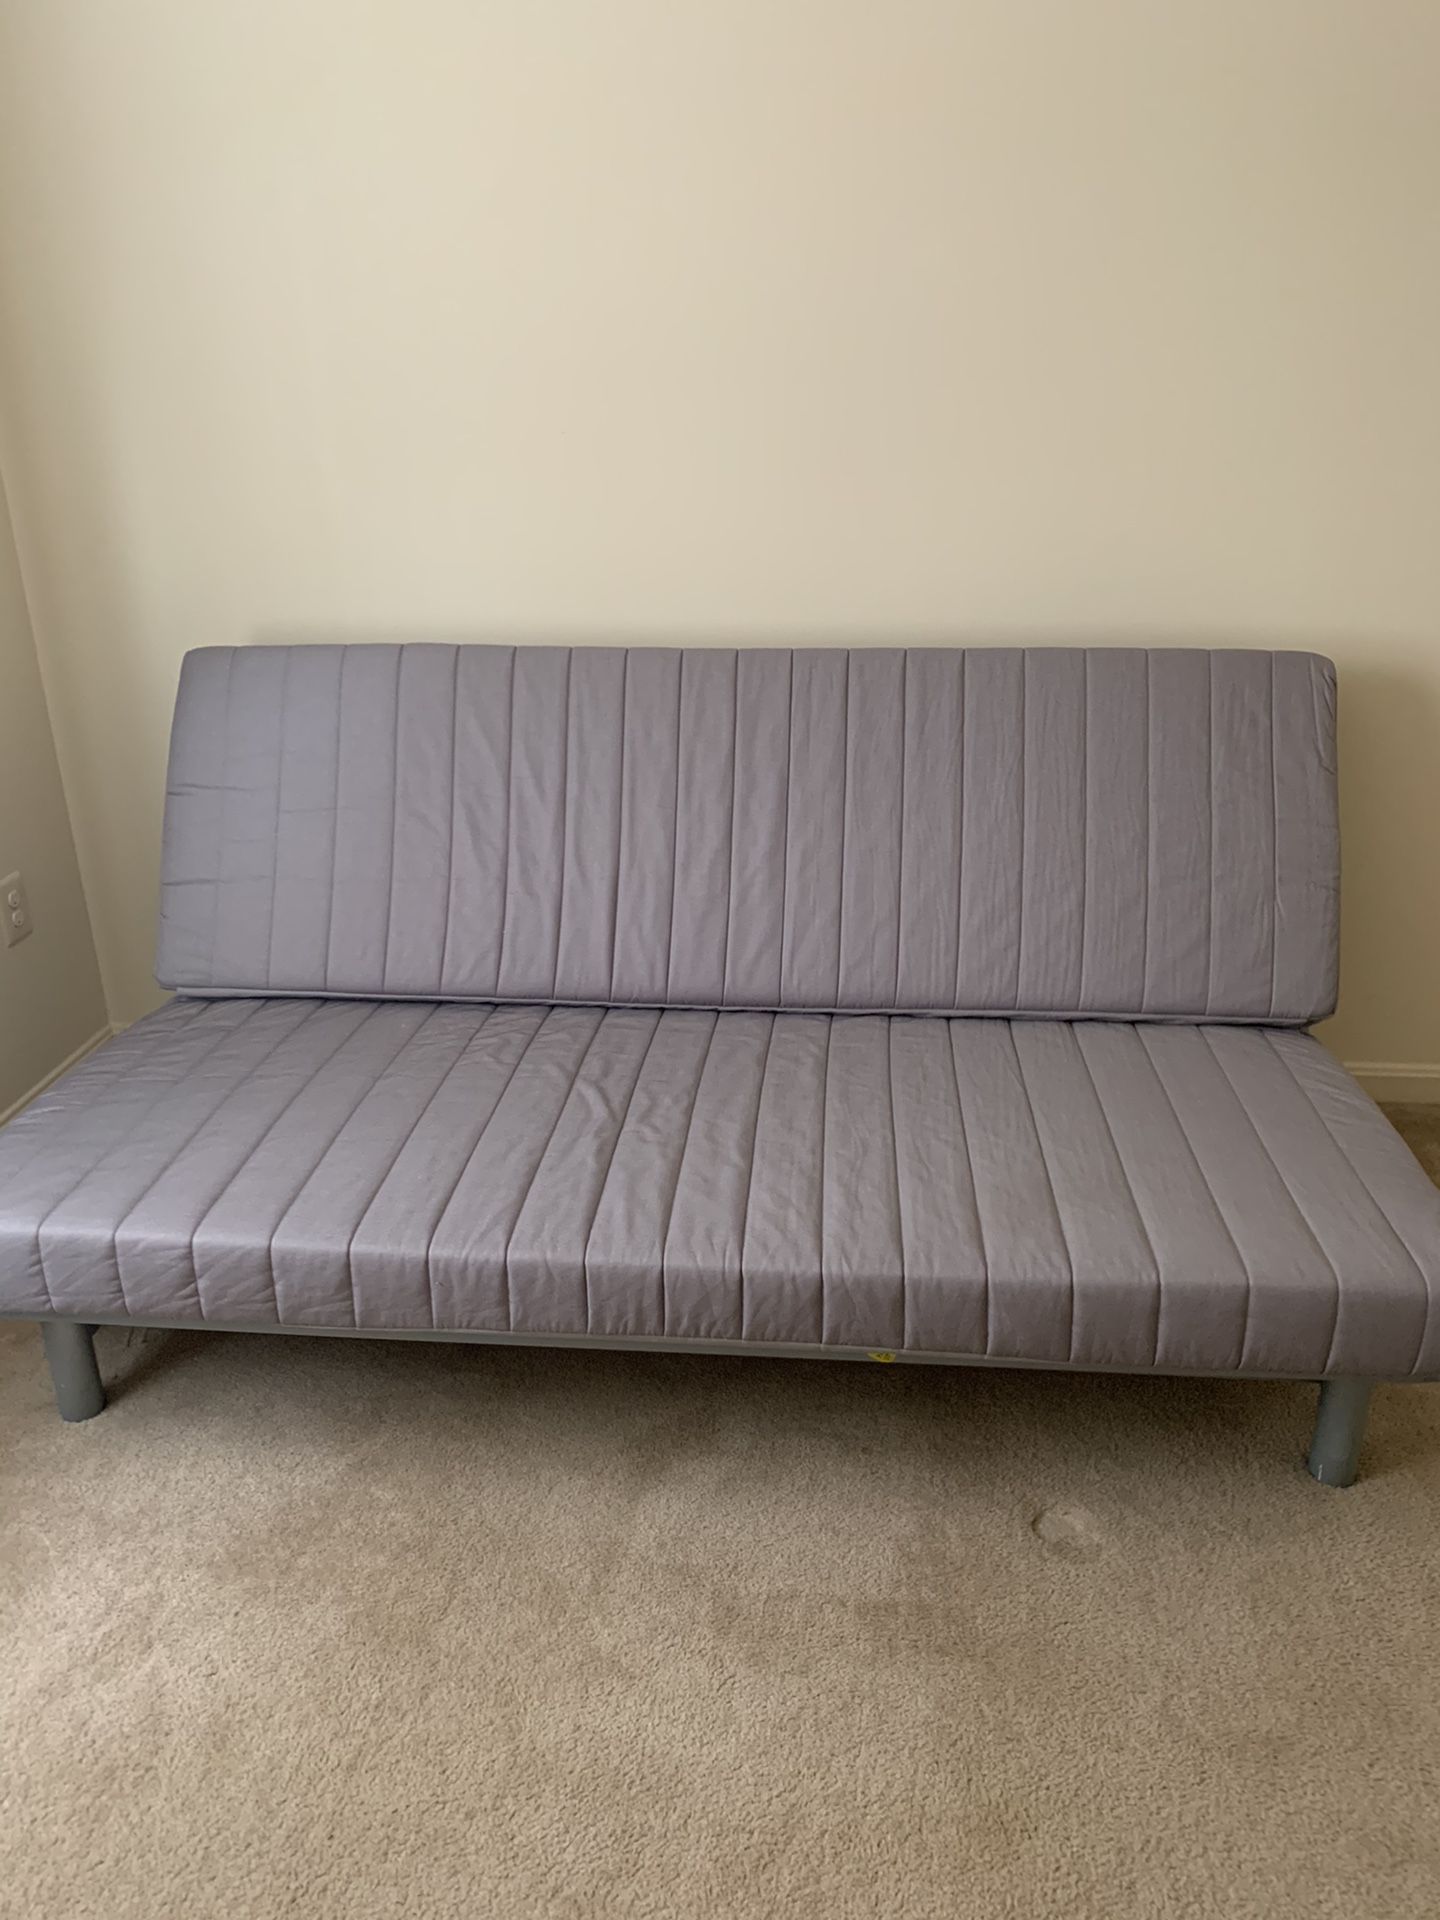 Barely used futon